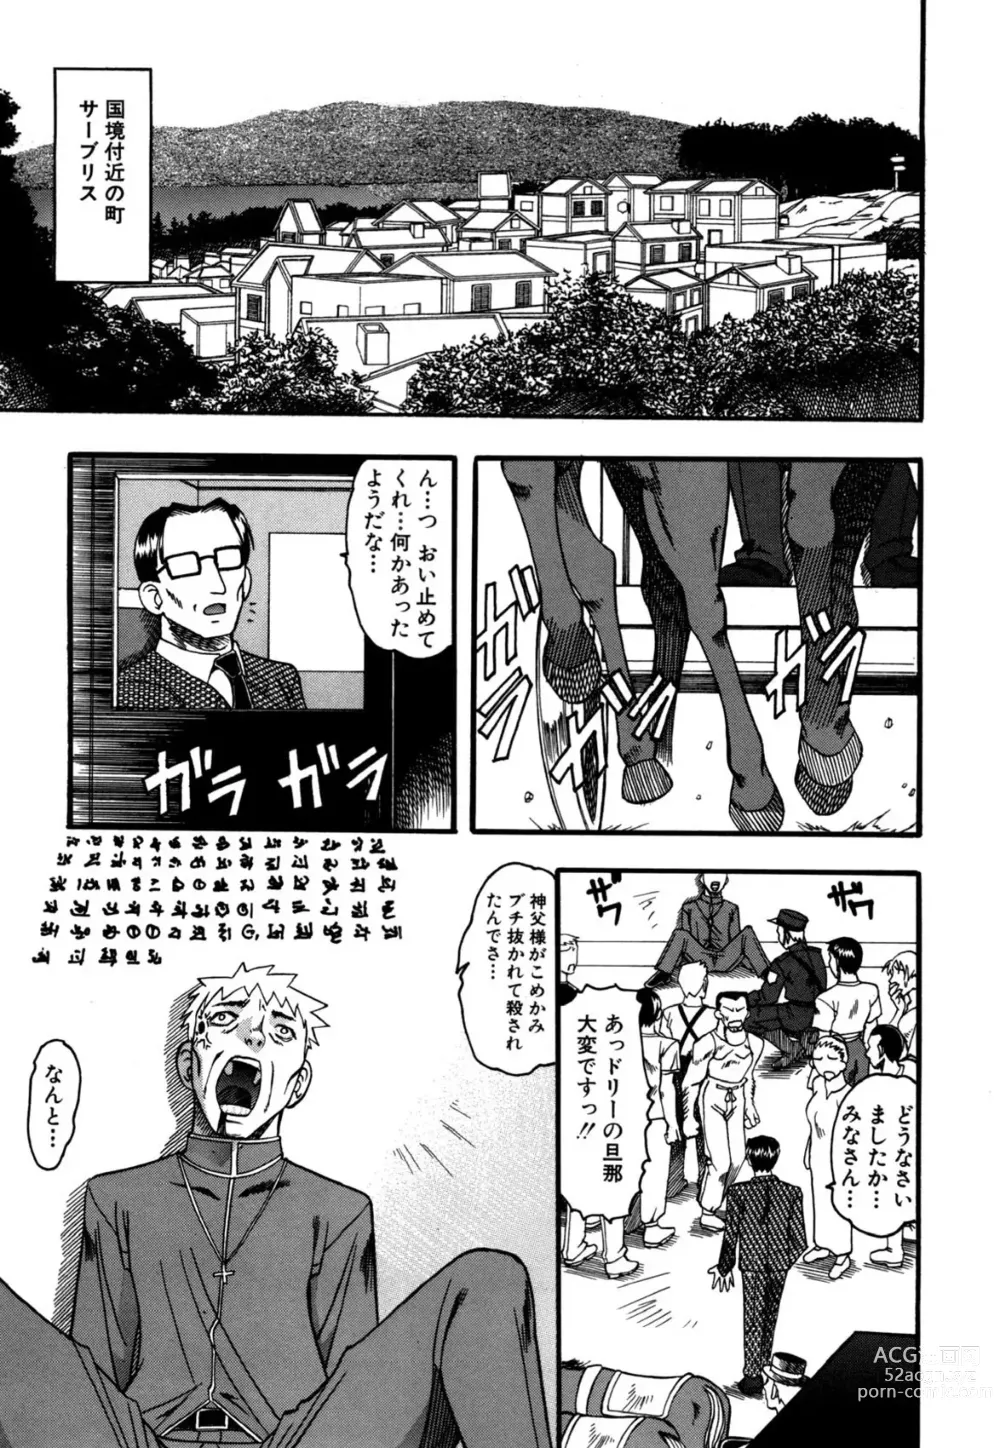 Page 6 of manga Mizugism